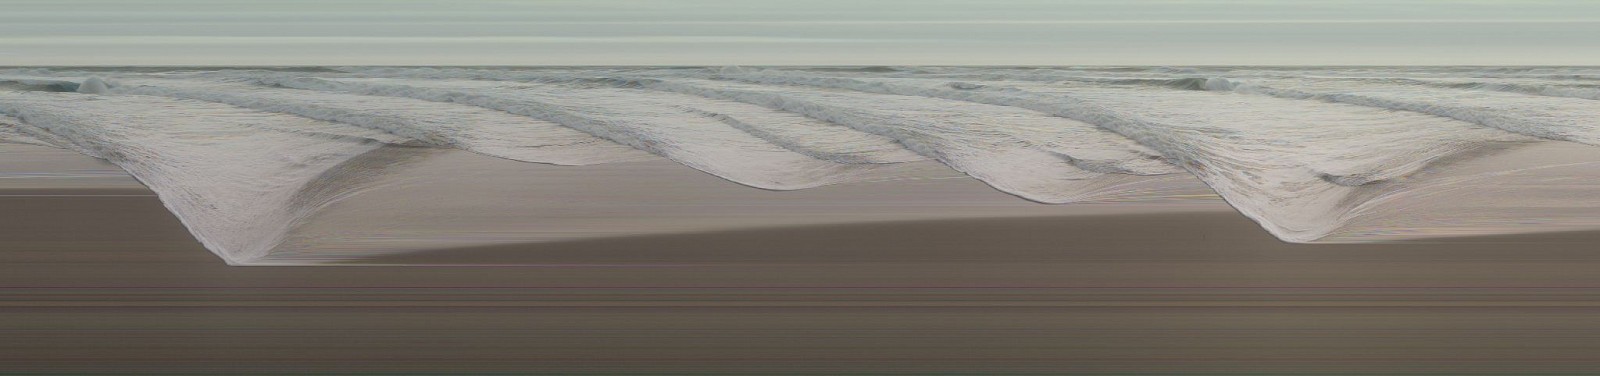 Jay Mark Johnson, STORM AT SEA #3, 2010 Malibu - Ventura CA
archival pigment on paper, mounted on aluminum, 40 x 170 in. (101.6 x 431.8 cm)